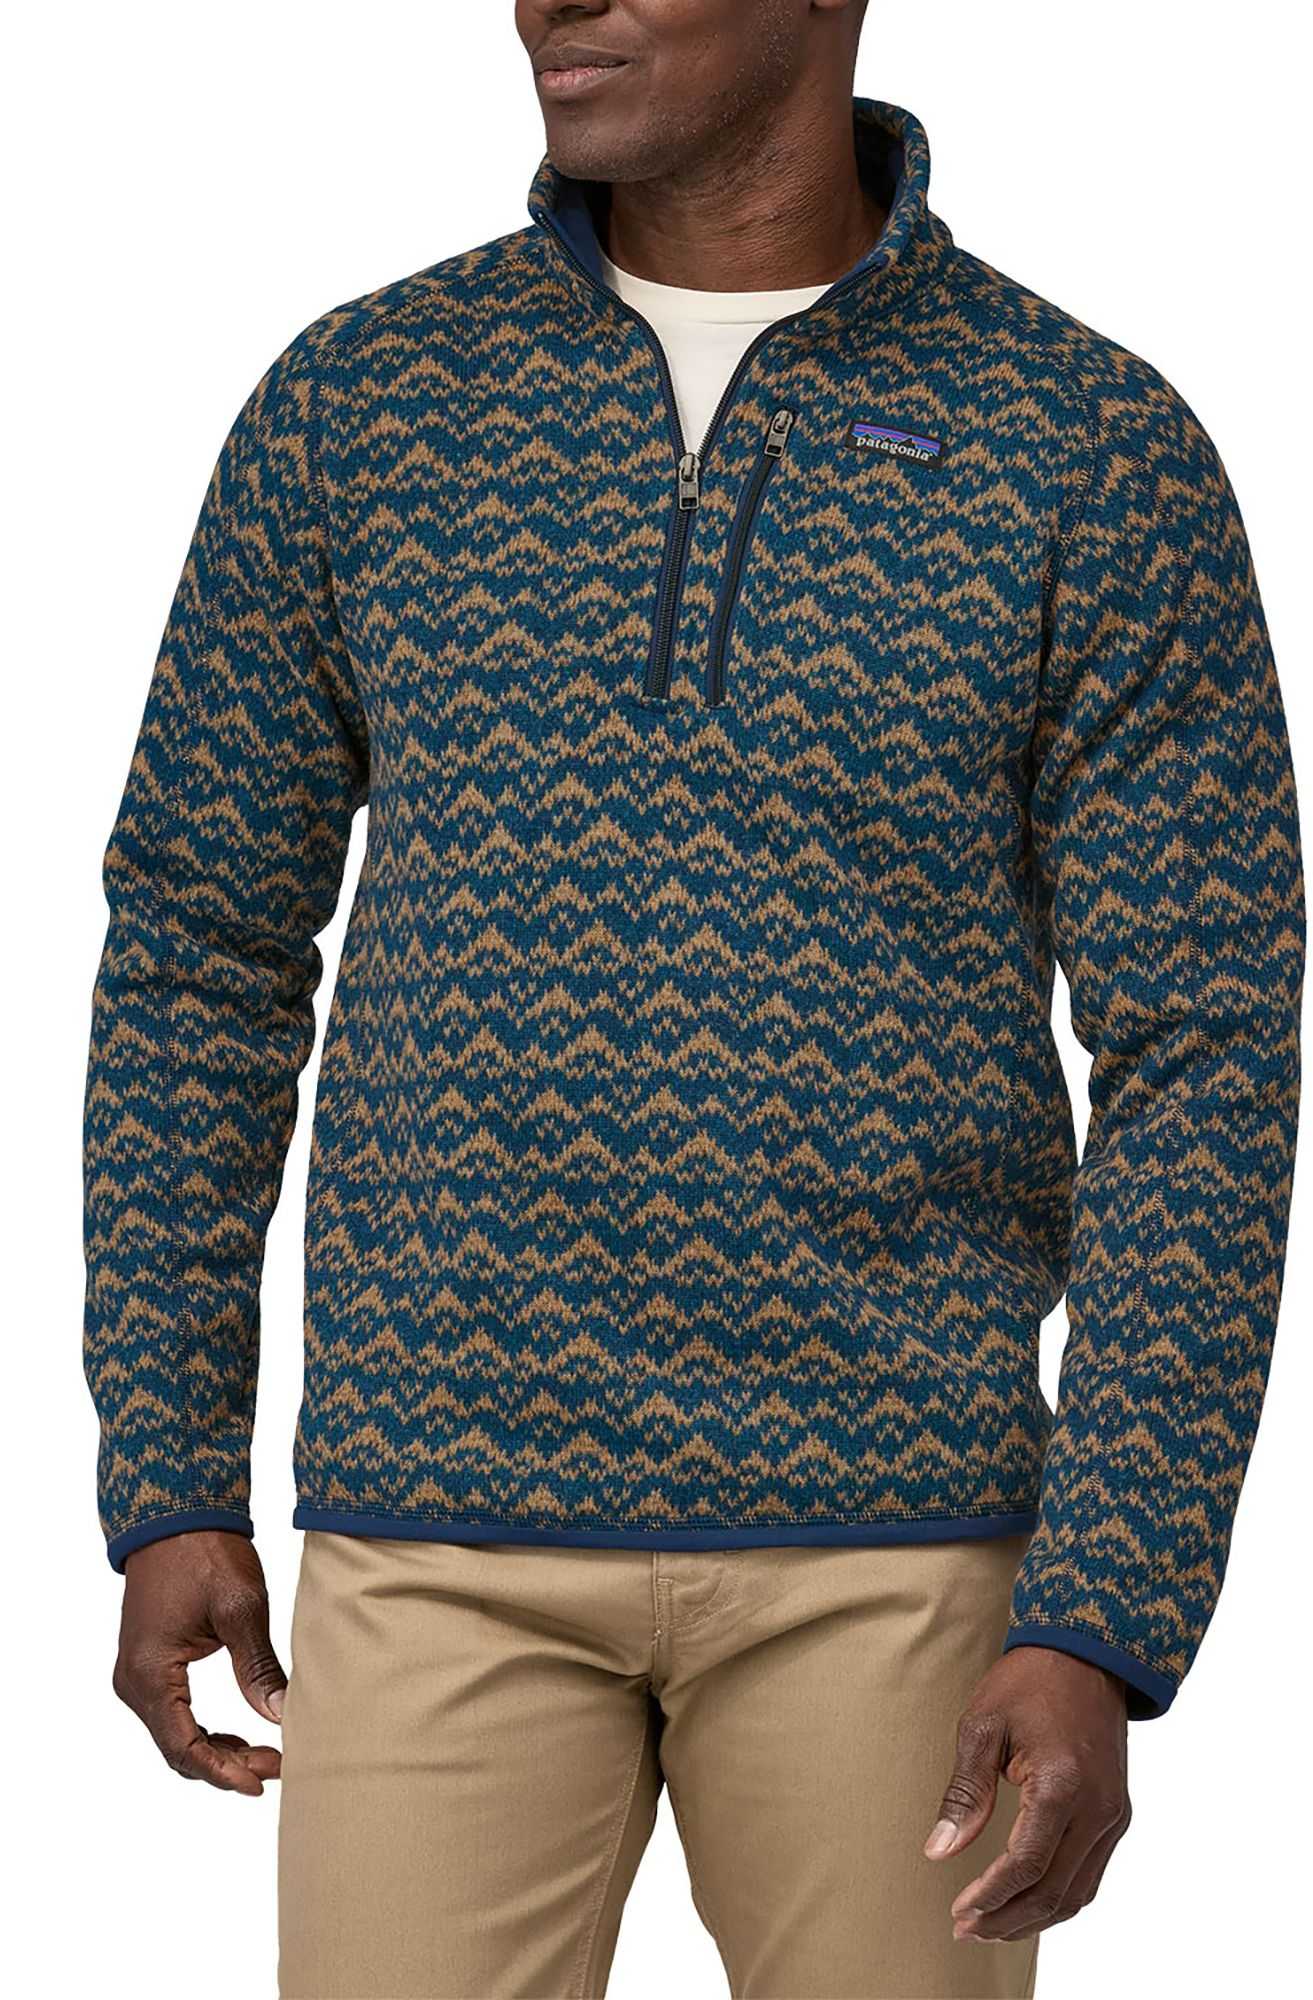 Patagonia Men's Better Sweater 1/4 Zip Pullover, Medium, Mountain Peak/New Navy